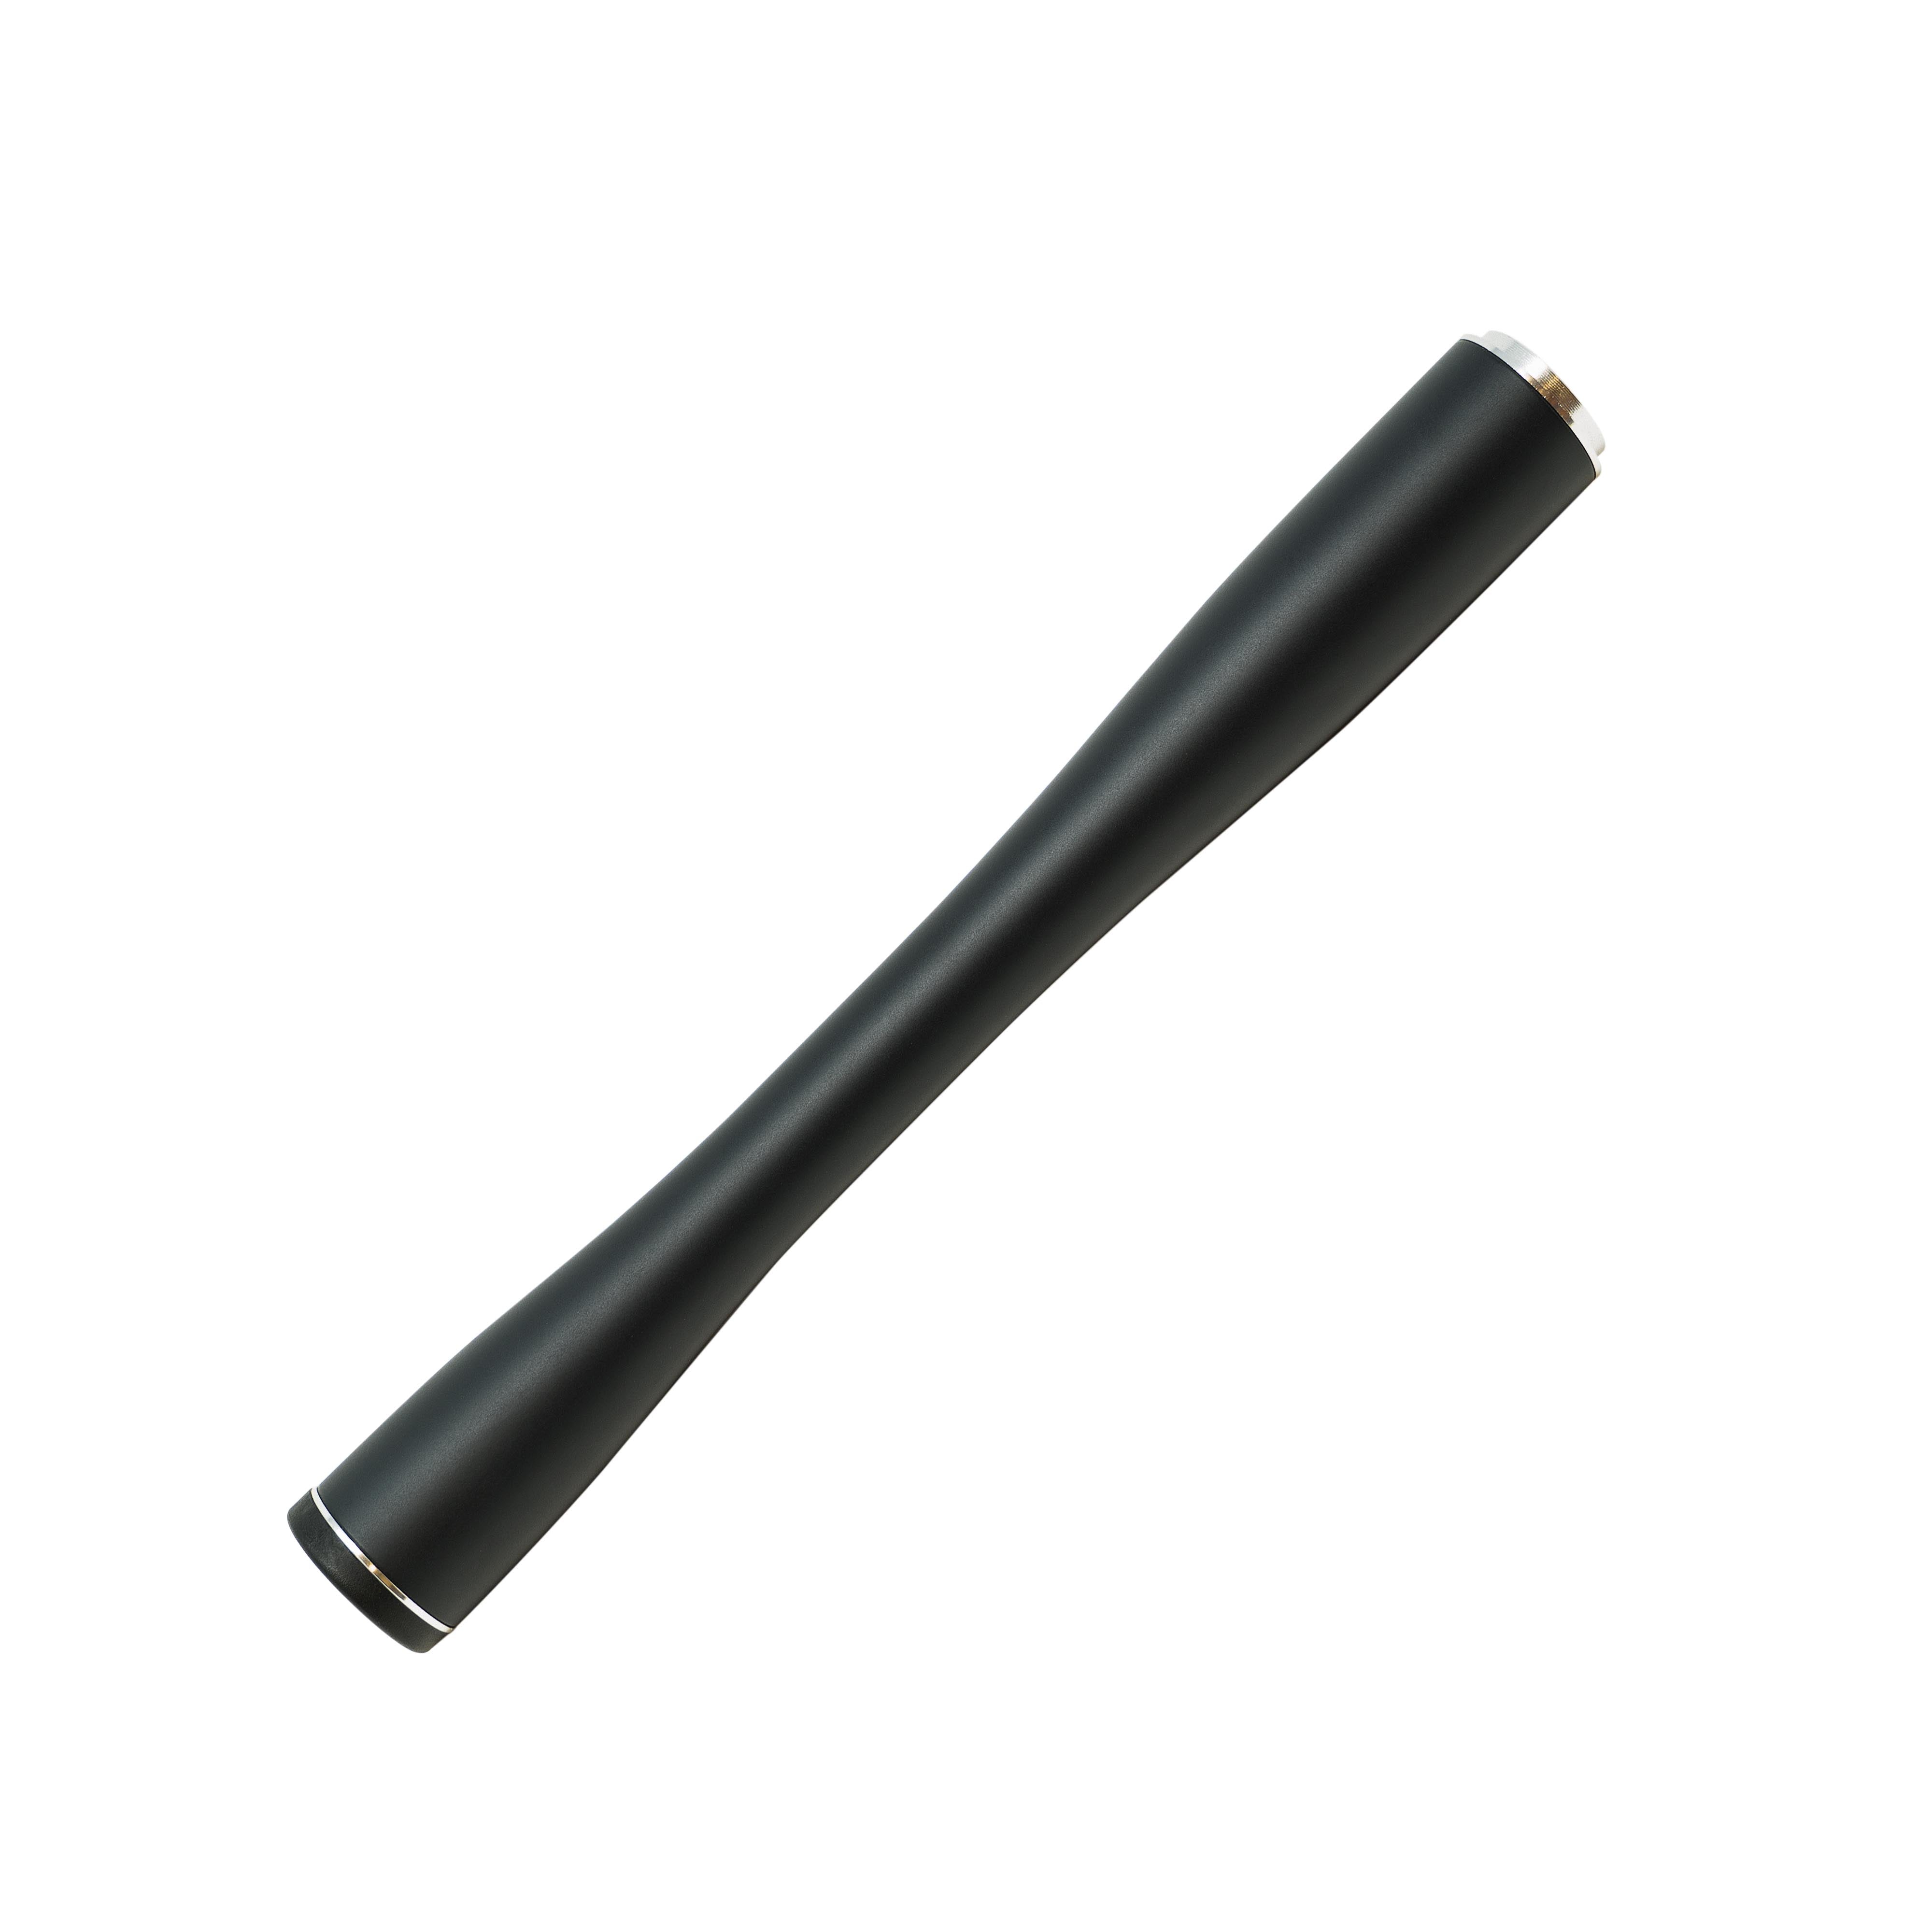 G2 9" Full Length Carbon Handle Grip Kit for Casting Rods